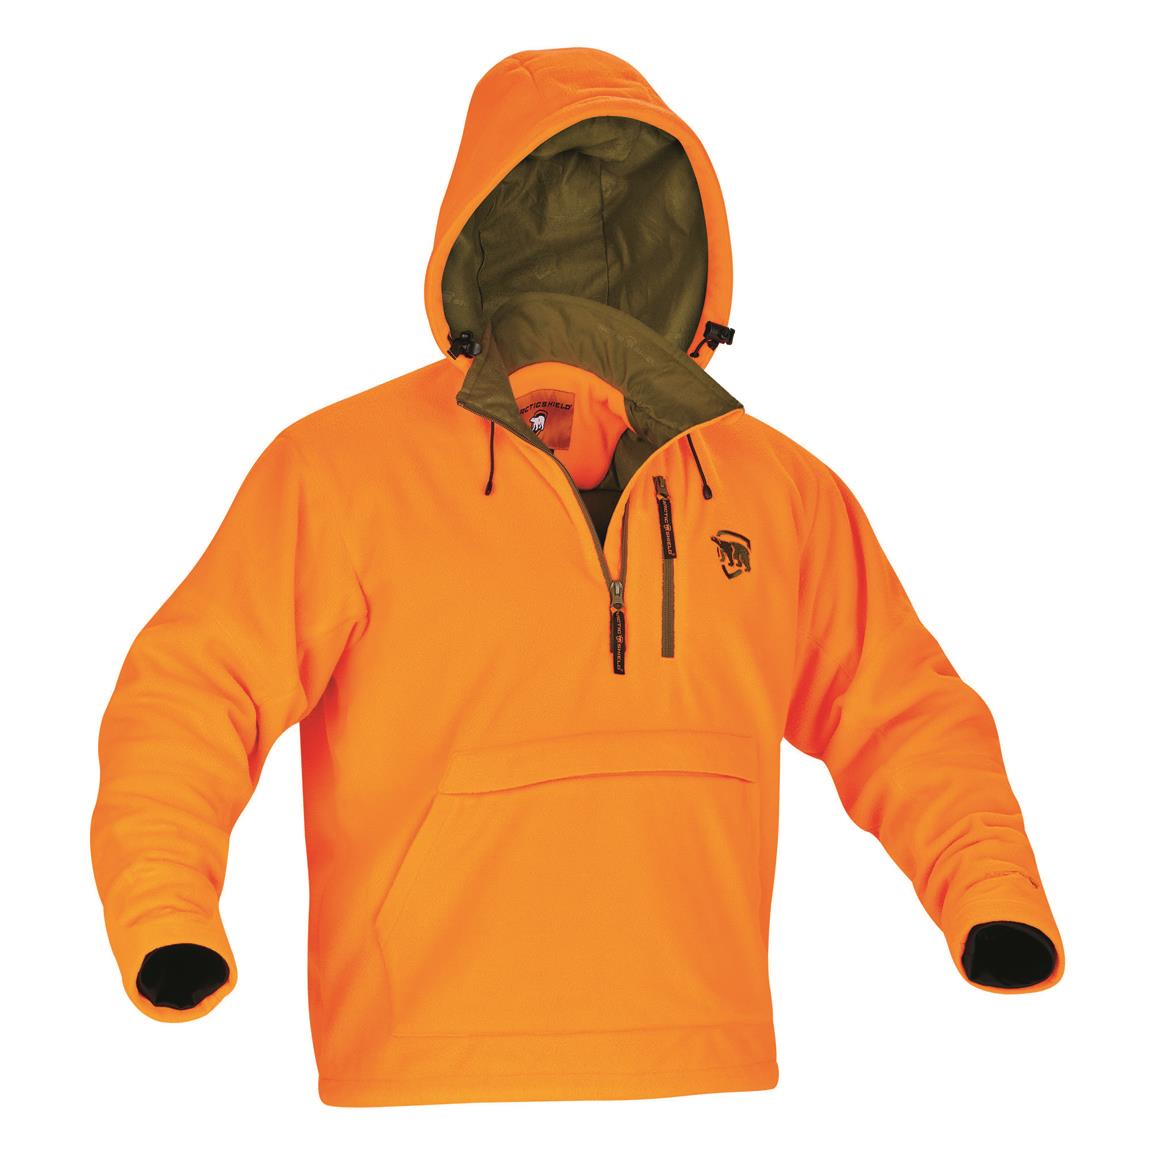 ArcticShield Men's Barricade Fleece Pullover, Blaze Orange